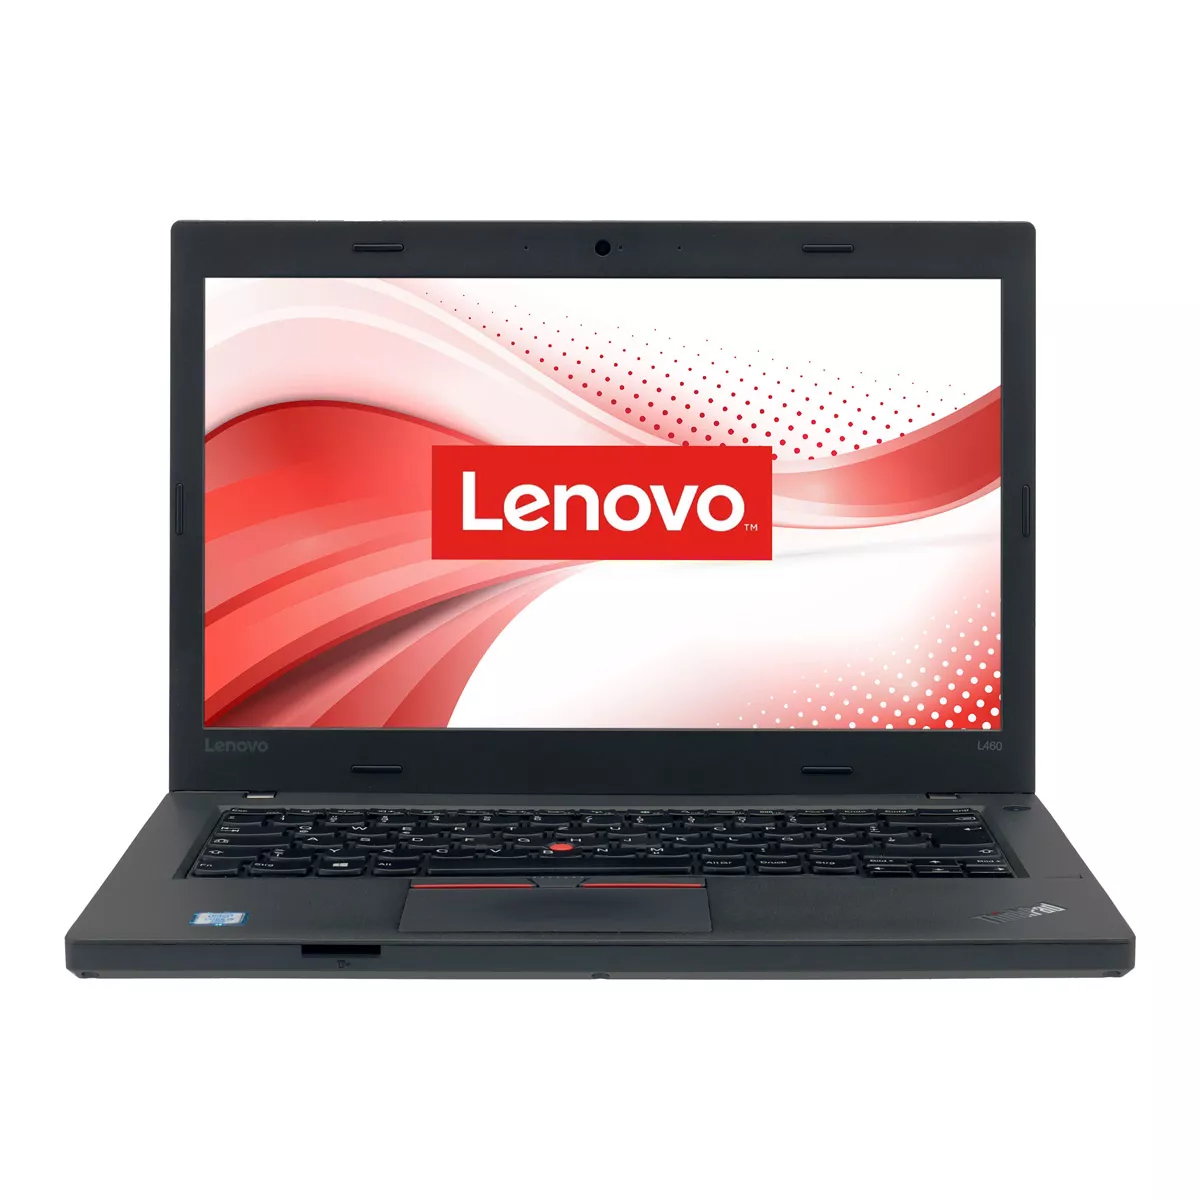 Lenovo ThinkPad L460 Core i5 6300U Full-HD 240 GB SSD Webcam A+